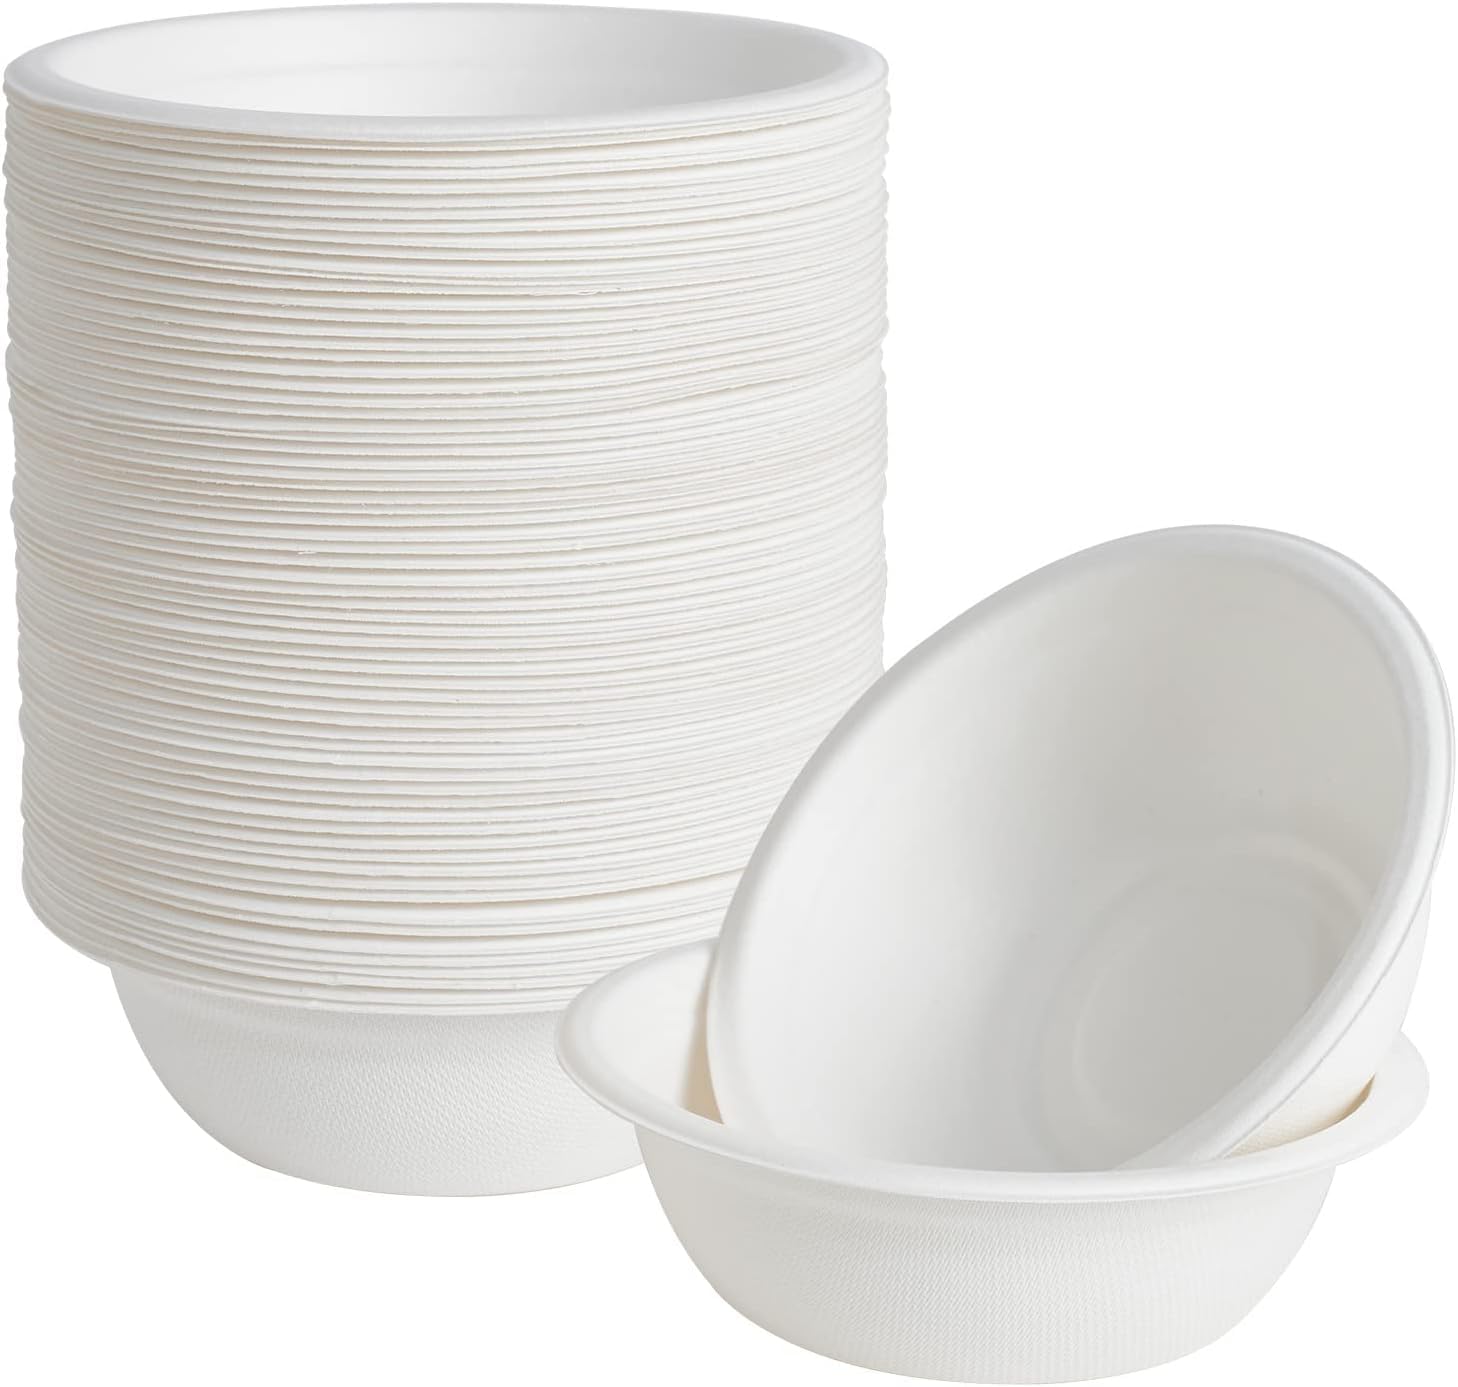 500 Pack 12 oz Paper Bowls, Disposable Compostable Bowls Heavy-Duty, Biodegradable Soup Bowls Made of Natural Bagasse, Eco-Friendly Sugarcane Bowls for Salad, Dessert, Milk, Cereals